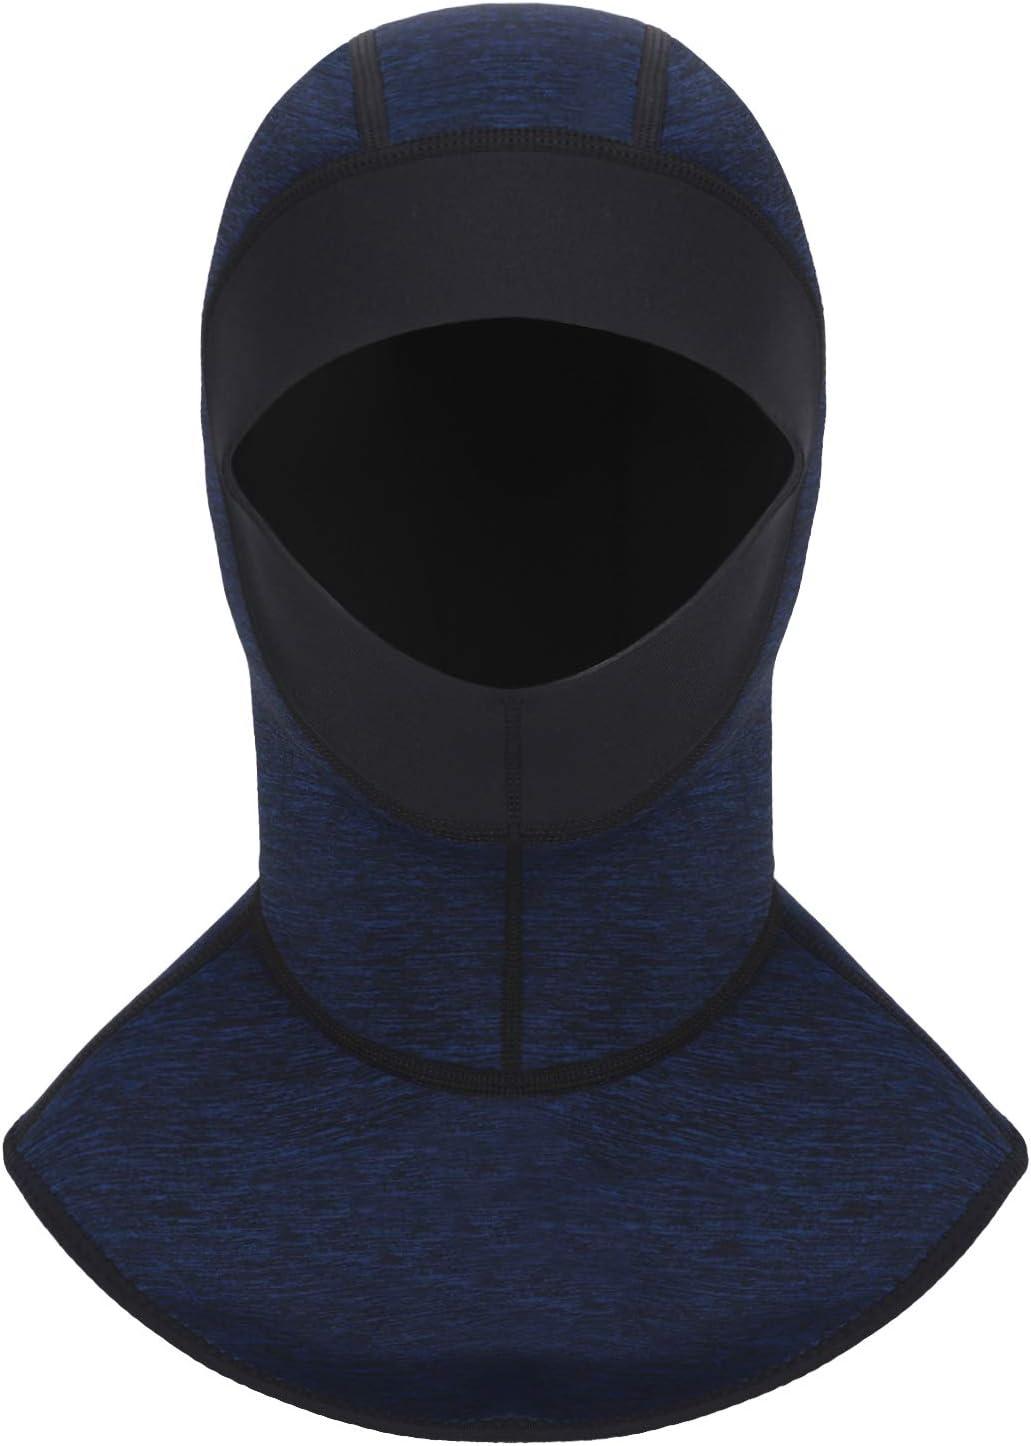 2mm Neoprene Diving Hood Thermal Wetsuit Hood Cap Swim Cap with Chin Straps